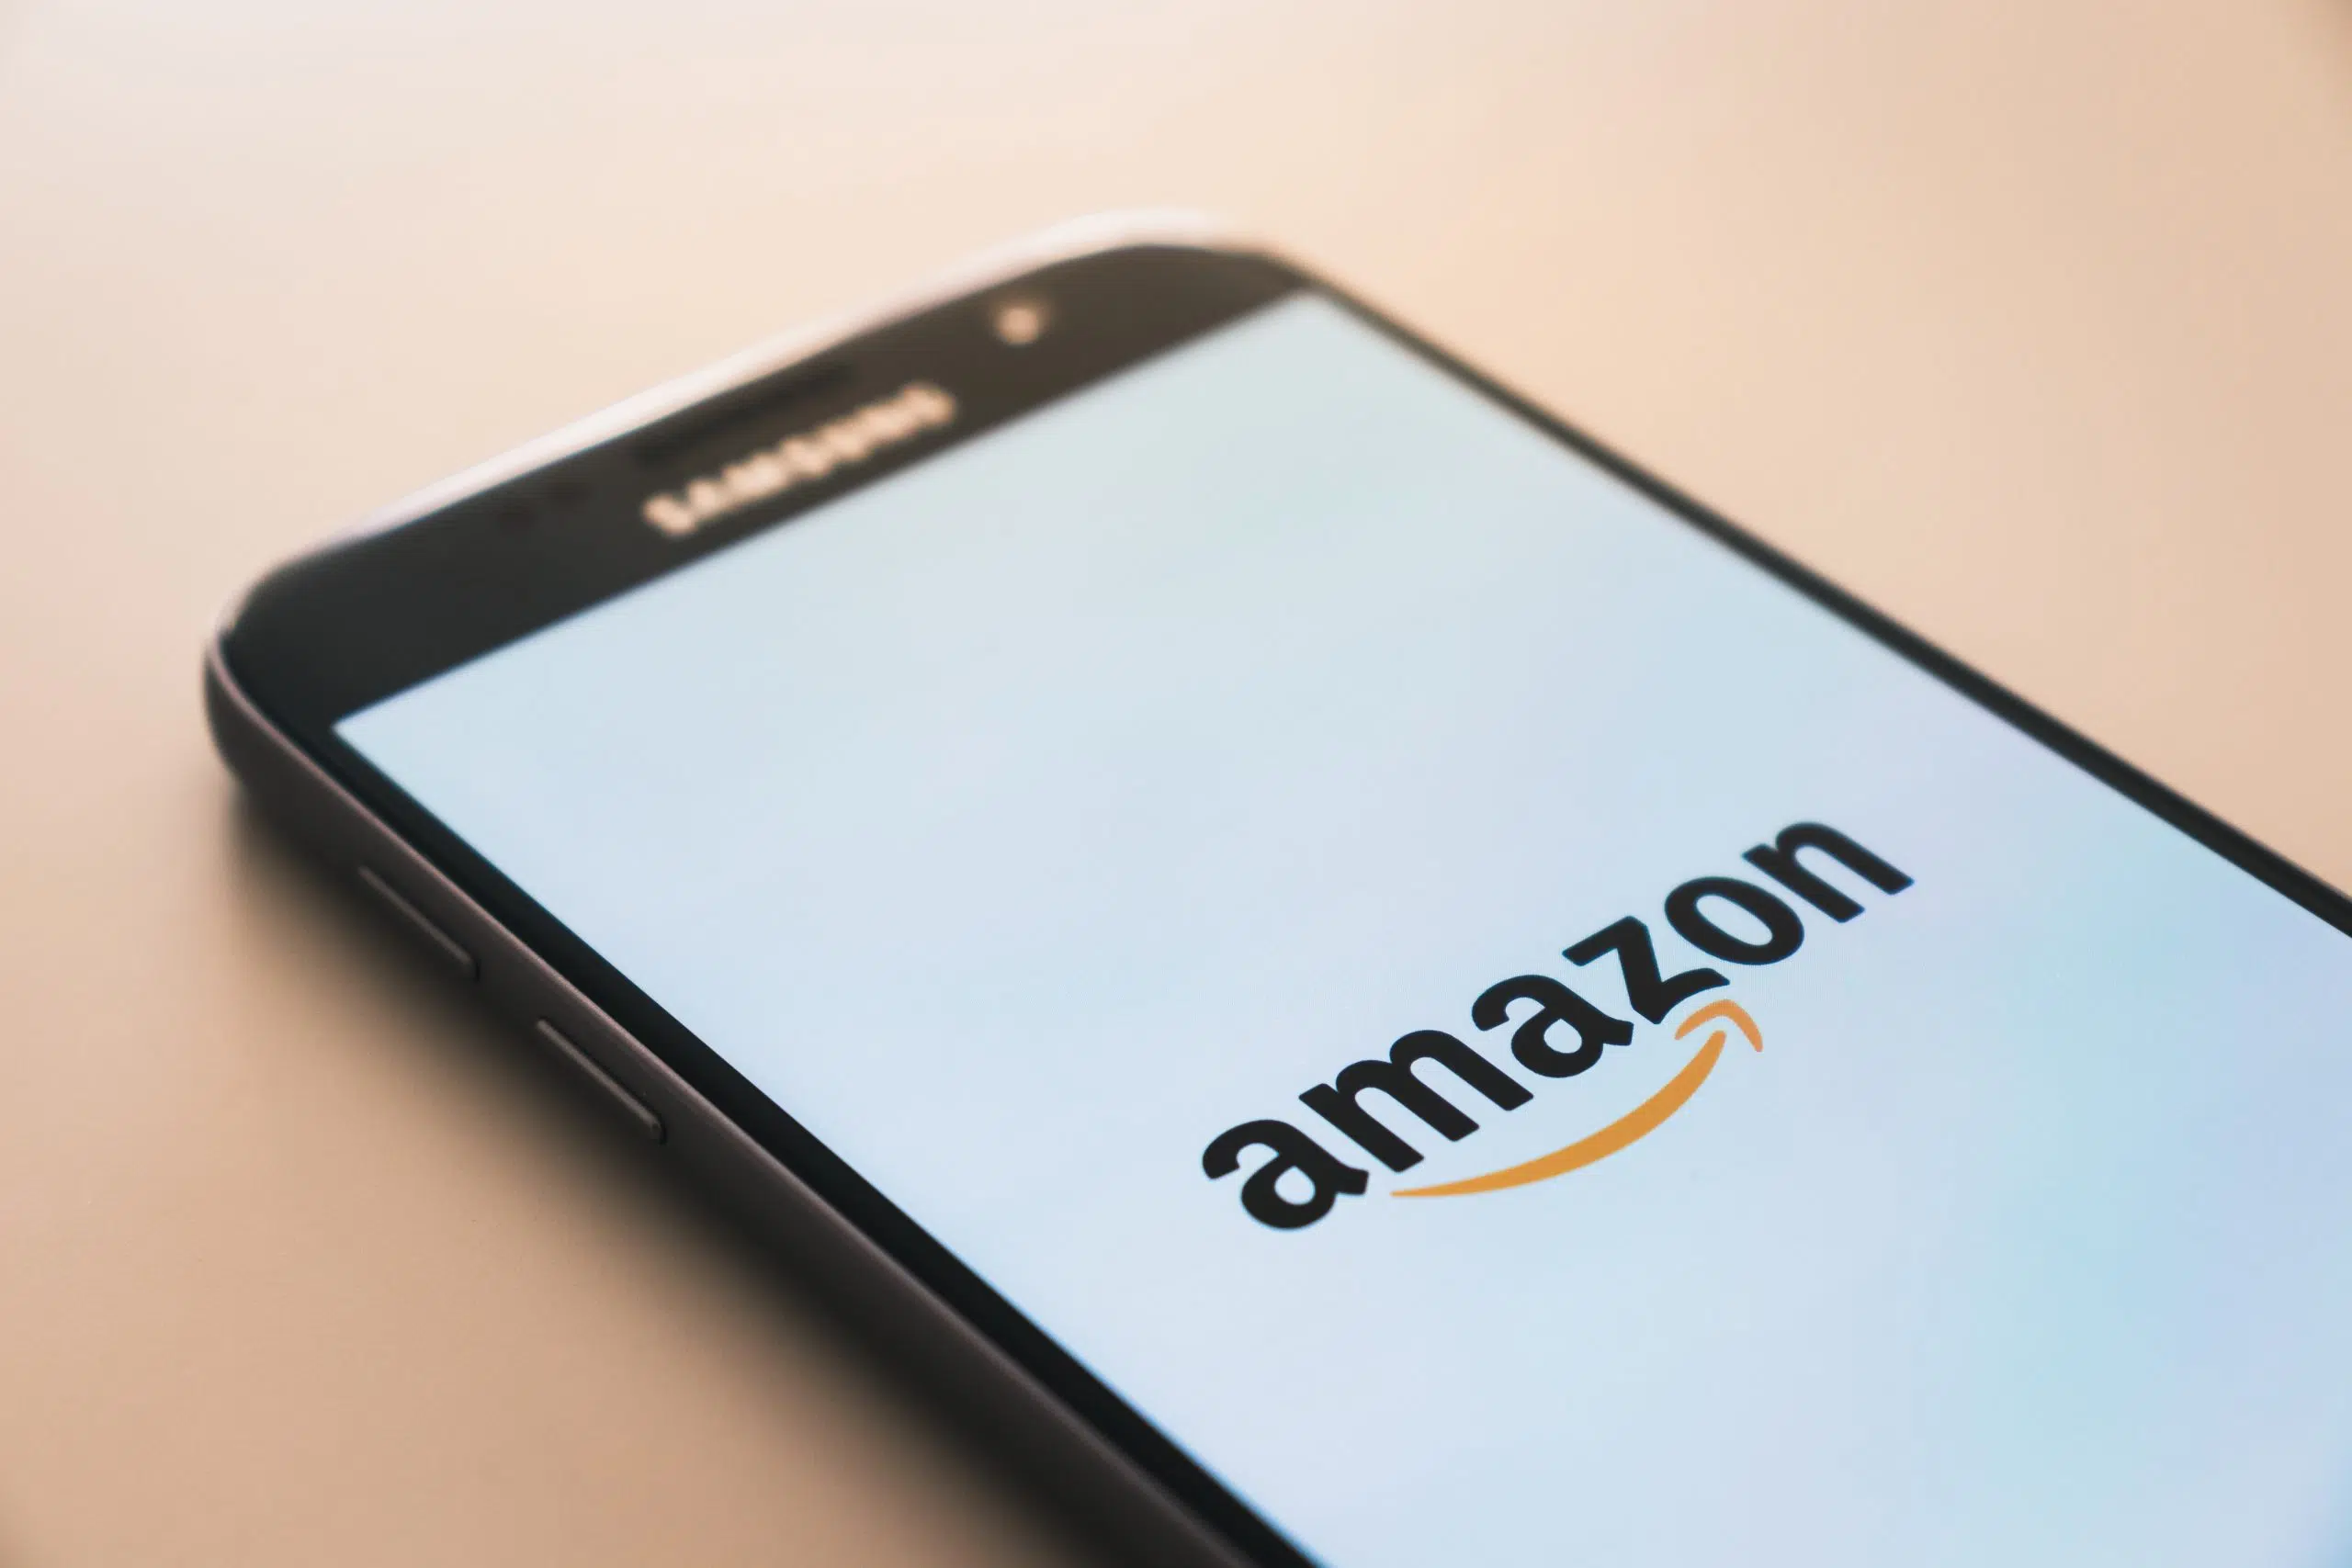 Amazon Prime membership fees are increasing in Canada